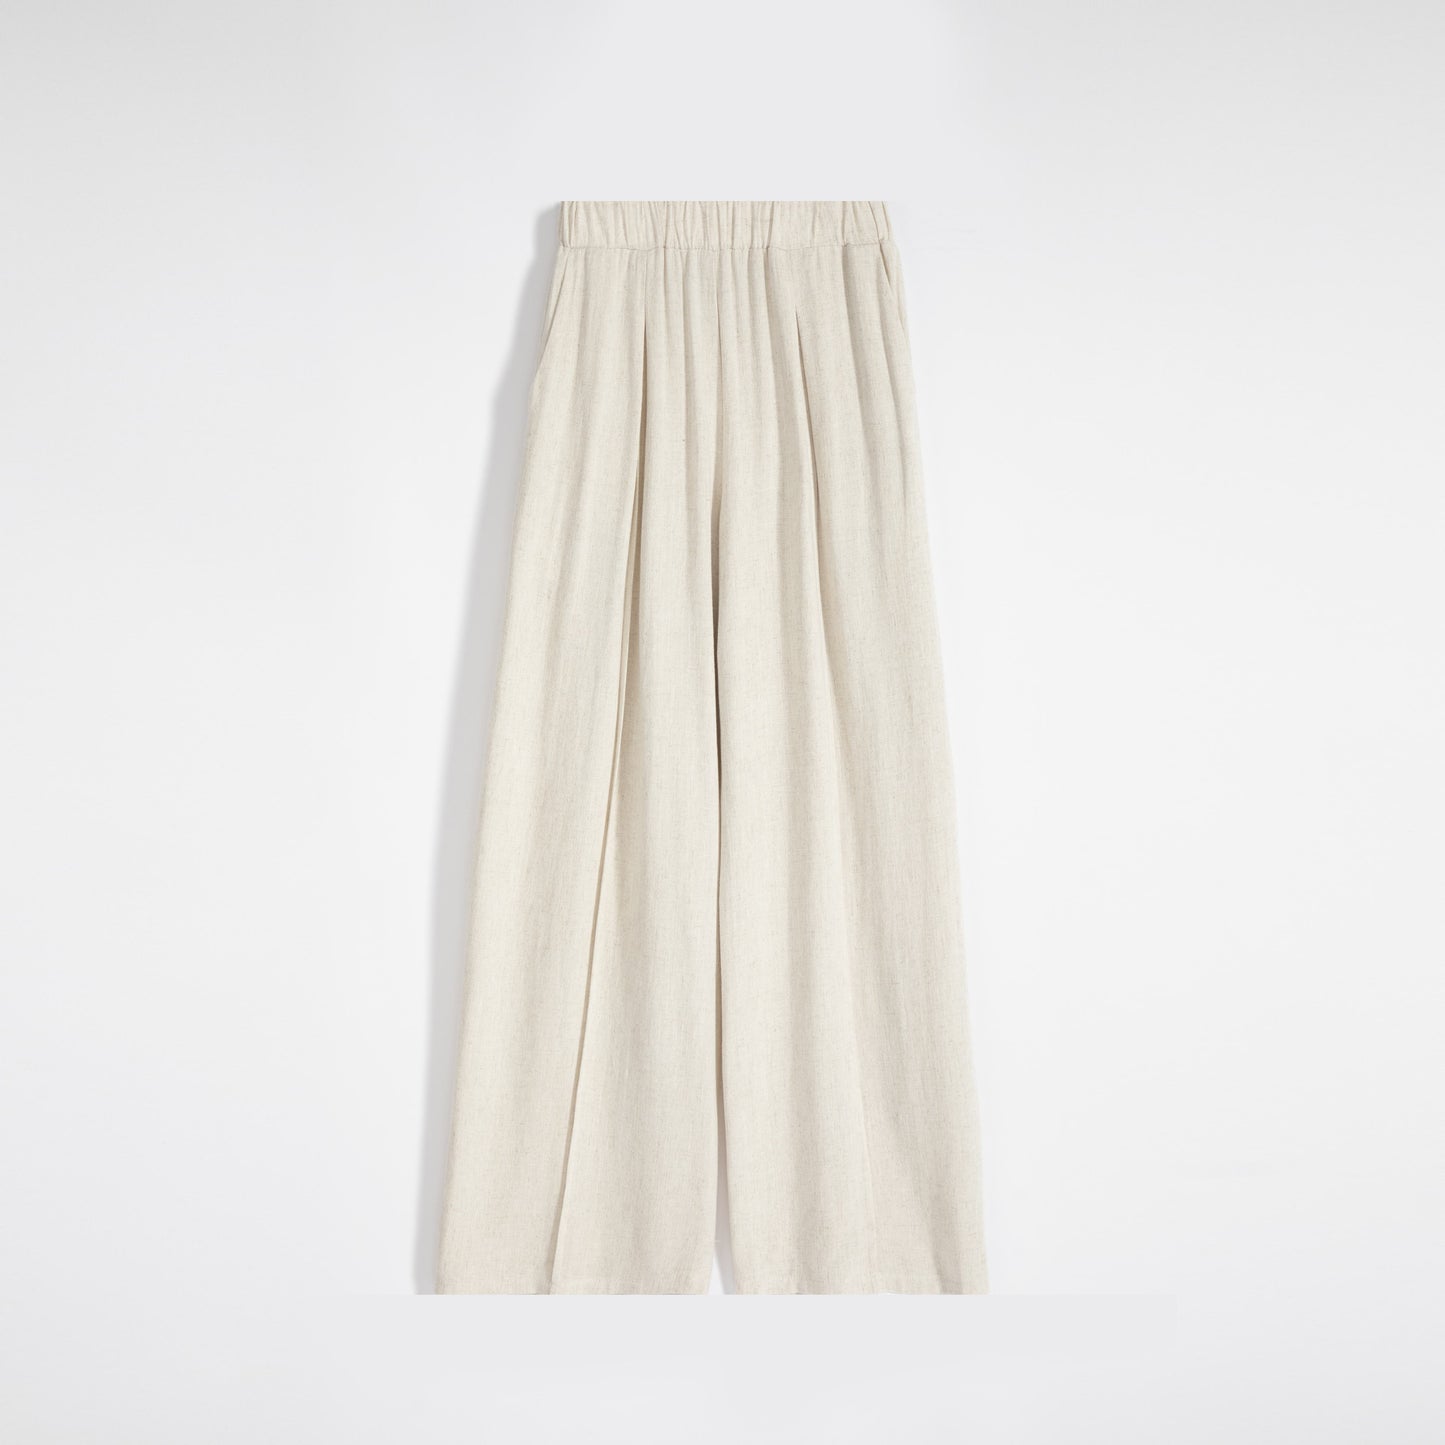 Pantalones holgados de lino sedoso de talle alto y ajuste flojo.